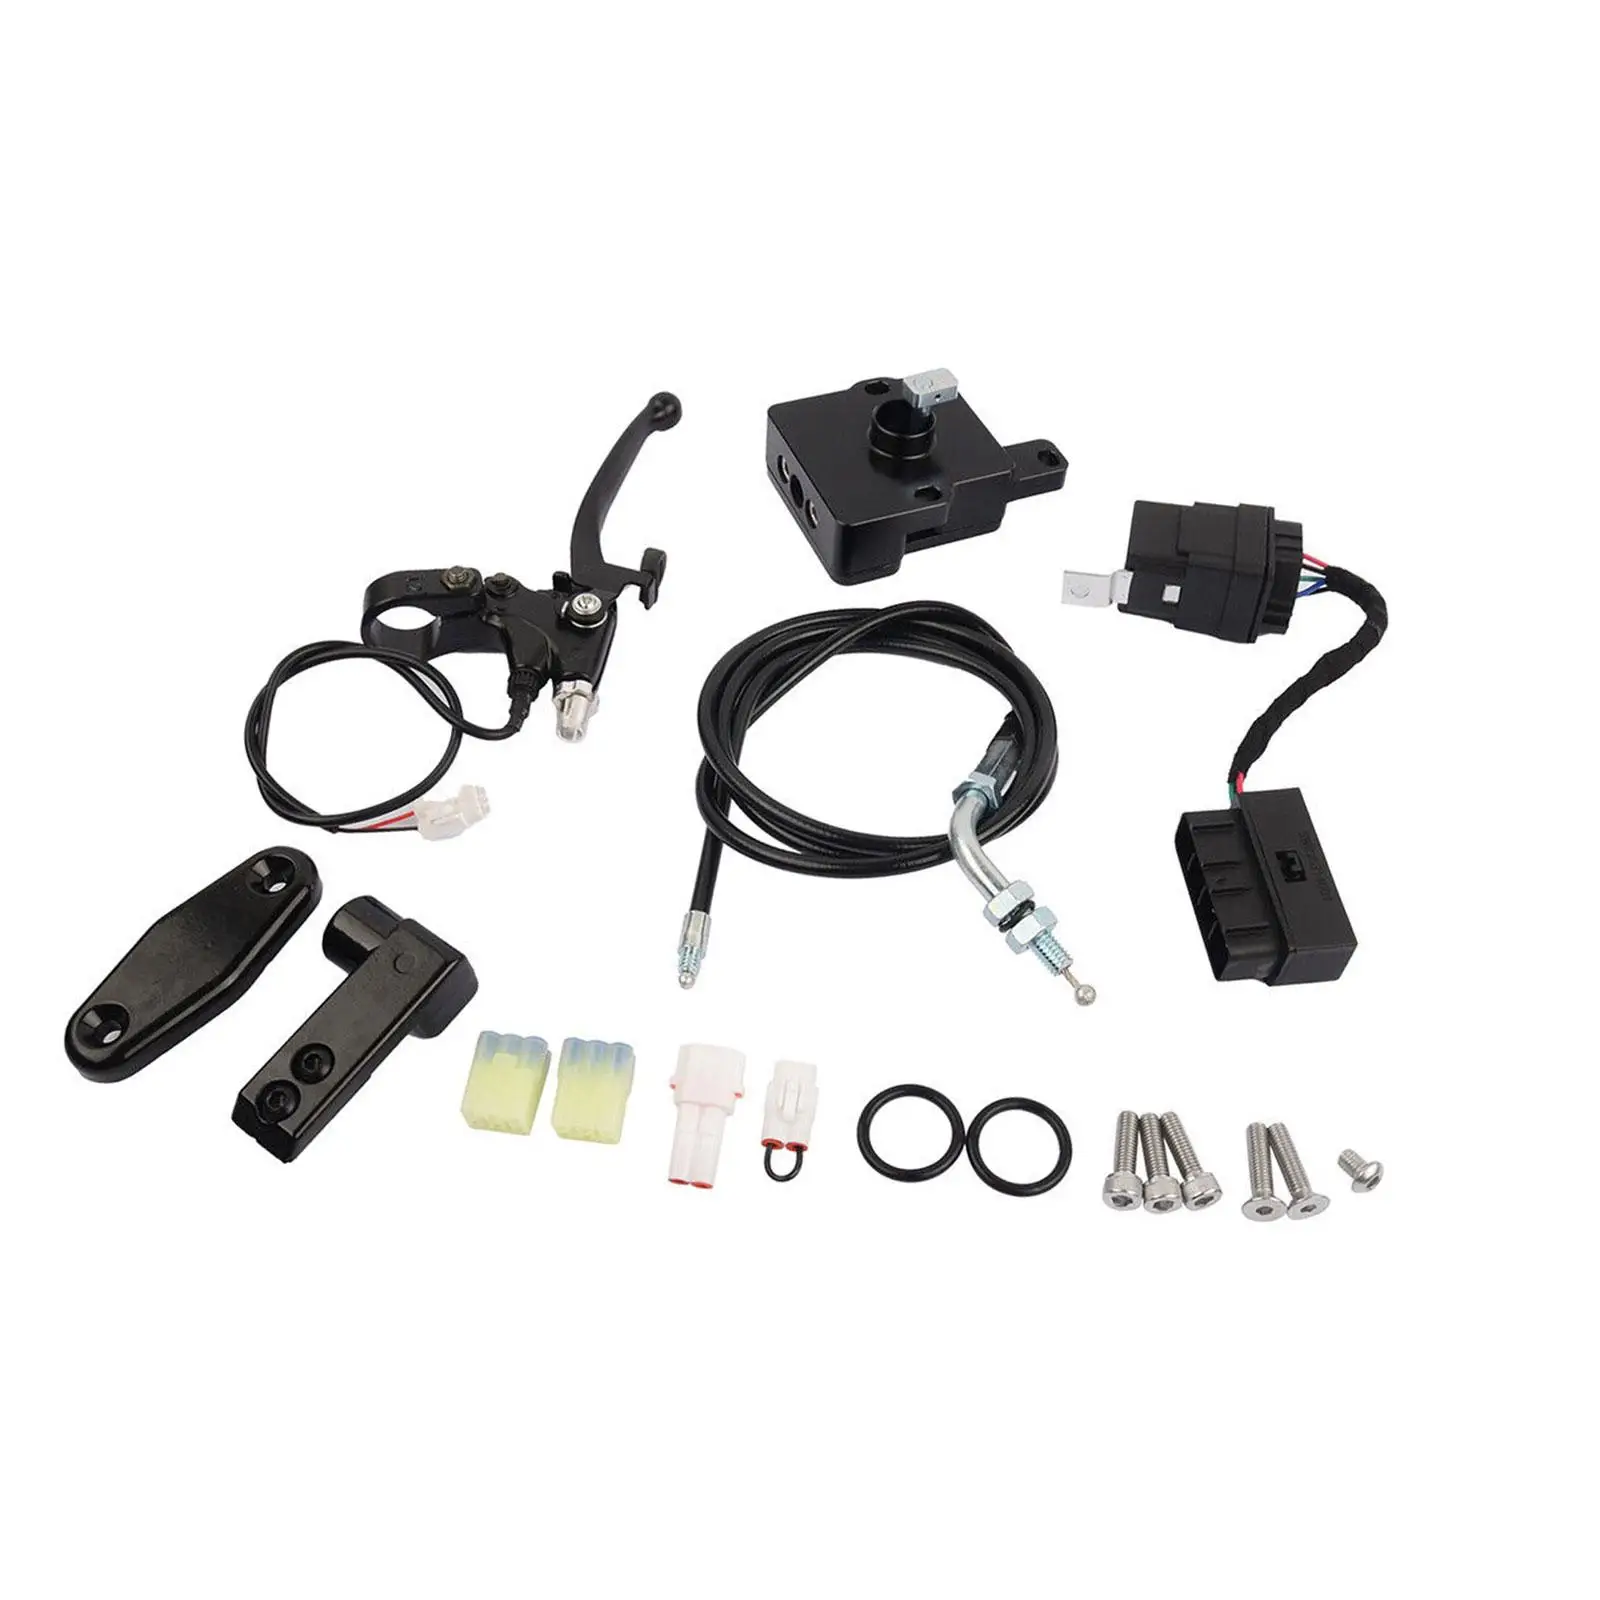 Manual 4WD Actuator Set 16172-0039 Strong Supplies for Kawasaki Brute Force